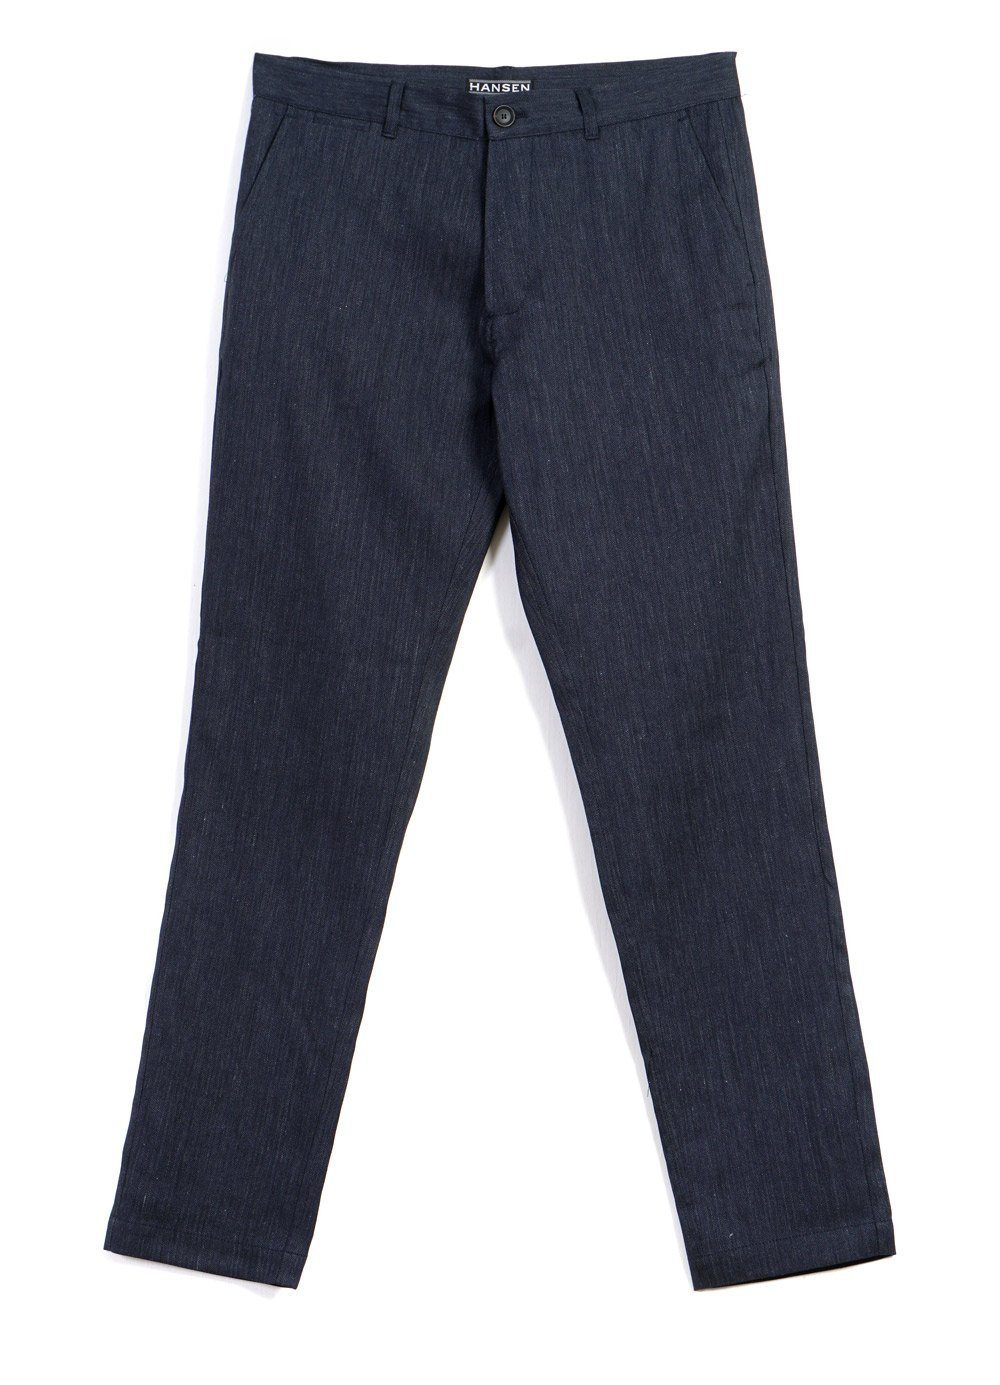 FRED | Regular Fit Trousers | Navy Melange -HANSEN Garments- HANSEN Garments